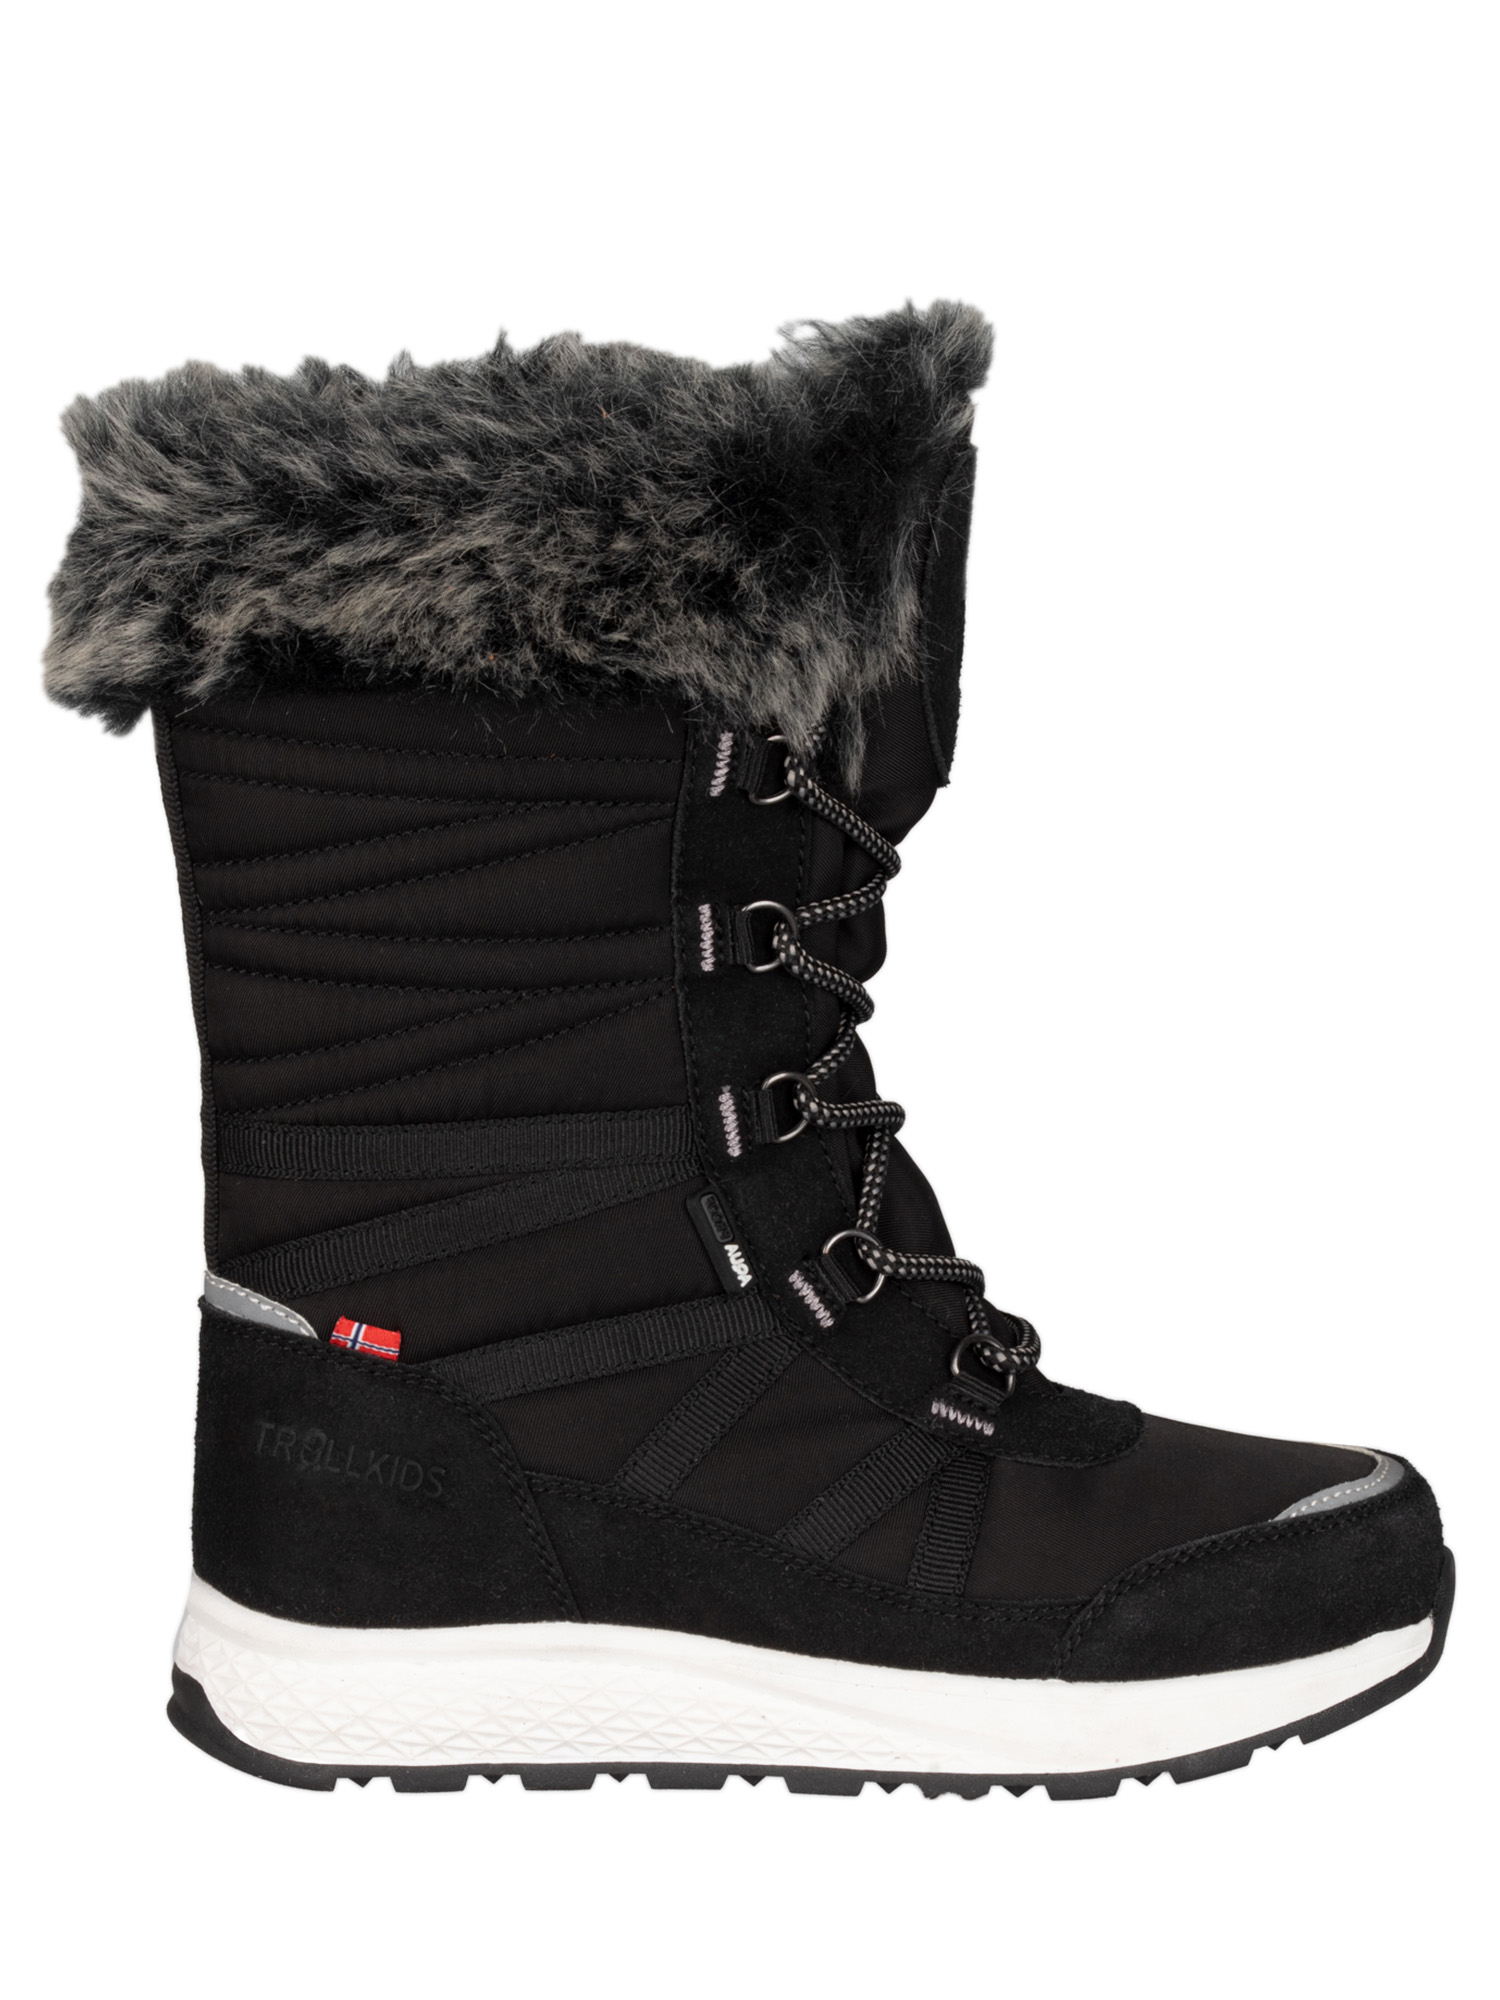 Ботинки Trollkids Girls Hemsedal Winter Boots Xt, черный, 37